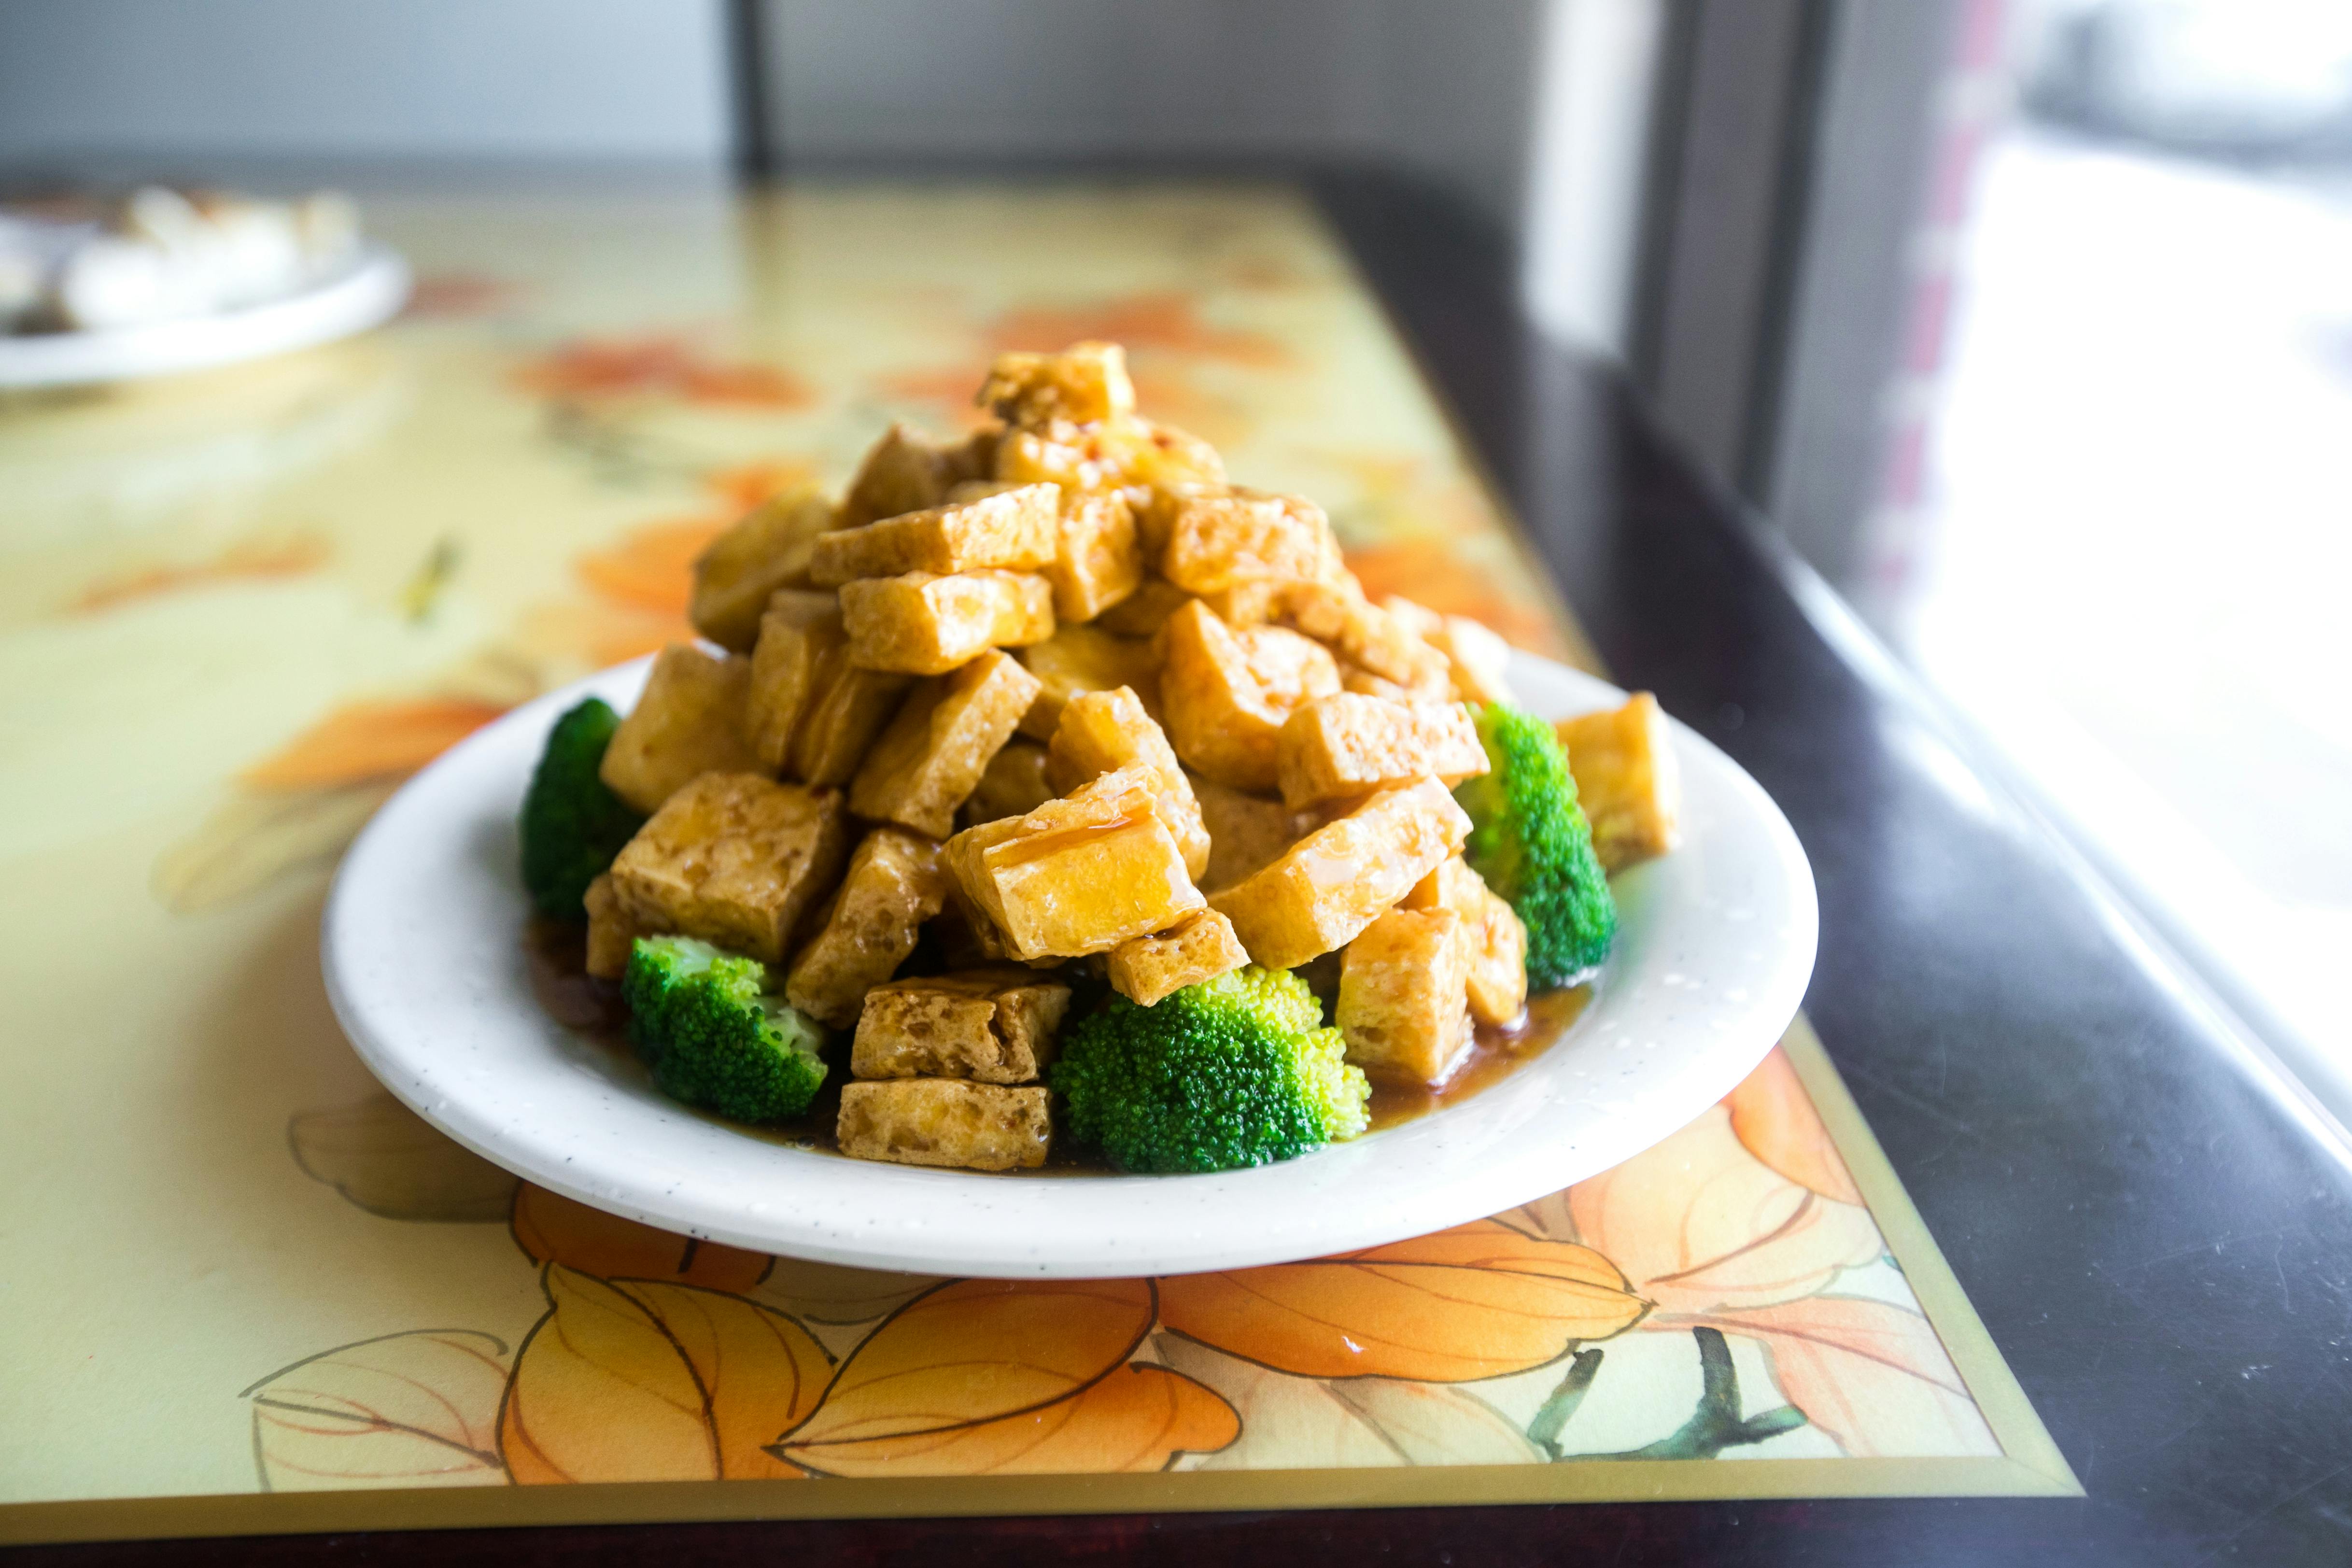 97. General Tso's Tofu from Good Taste Chinese Restaurant in Richmond, VA